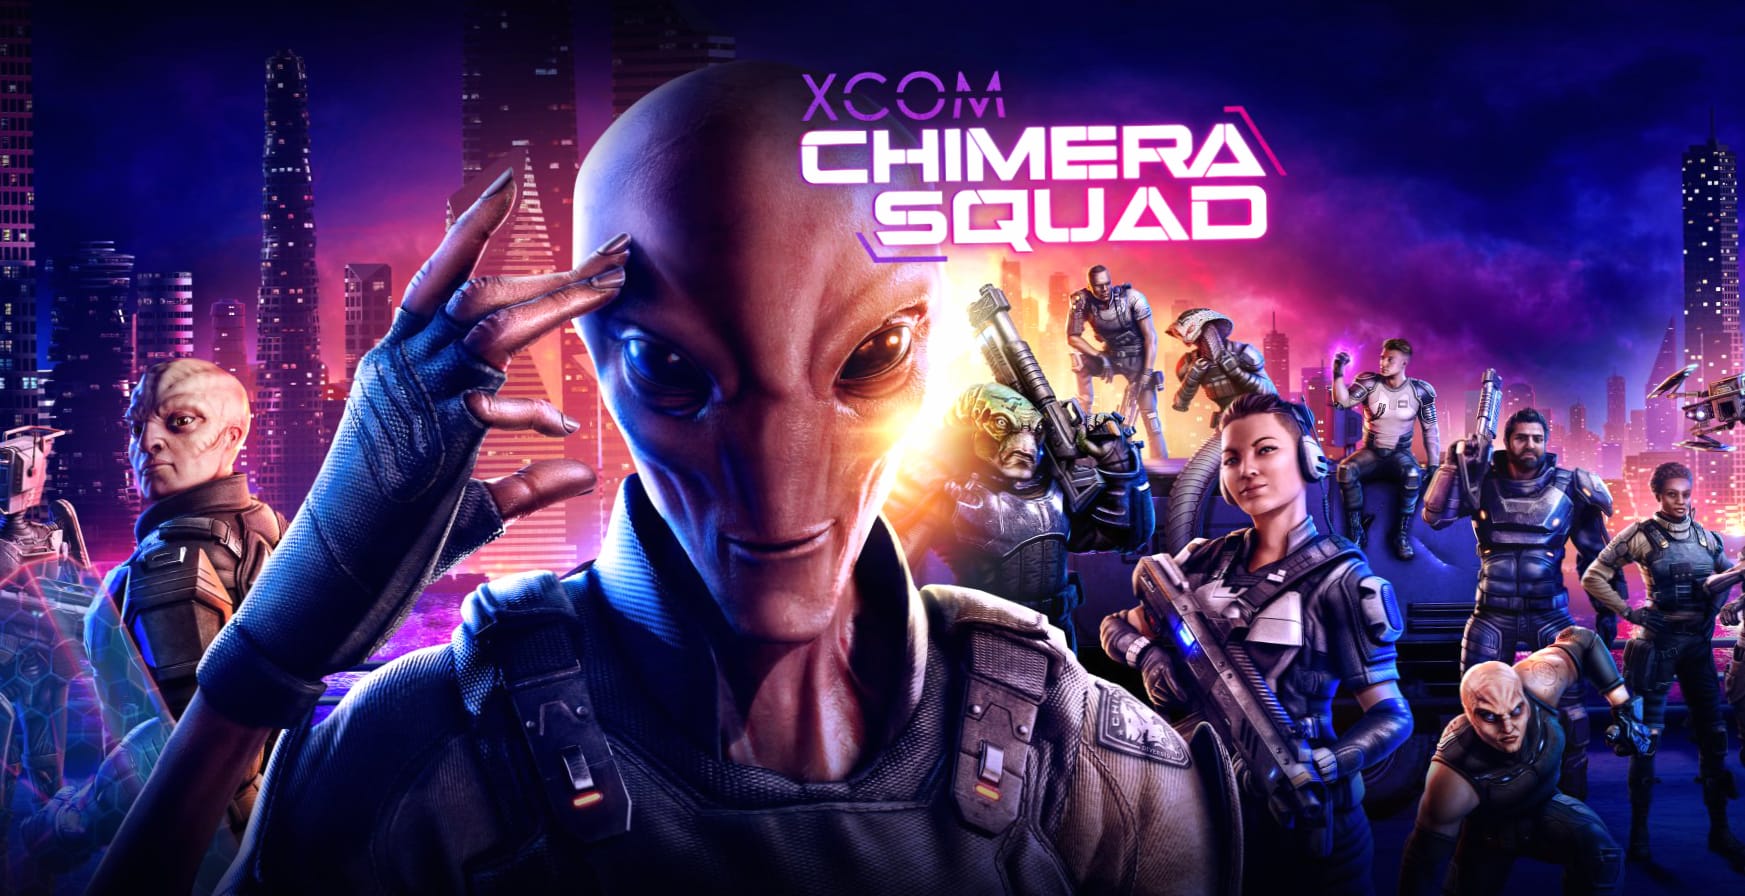 XCOM Chimera Squad at 640 x 1136 iPhone 5 size wallpapers HD quality